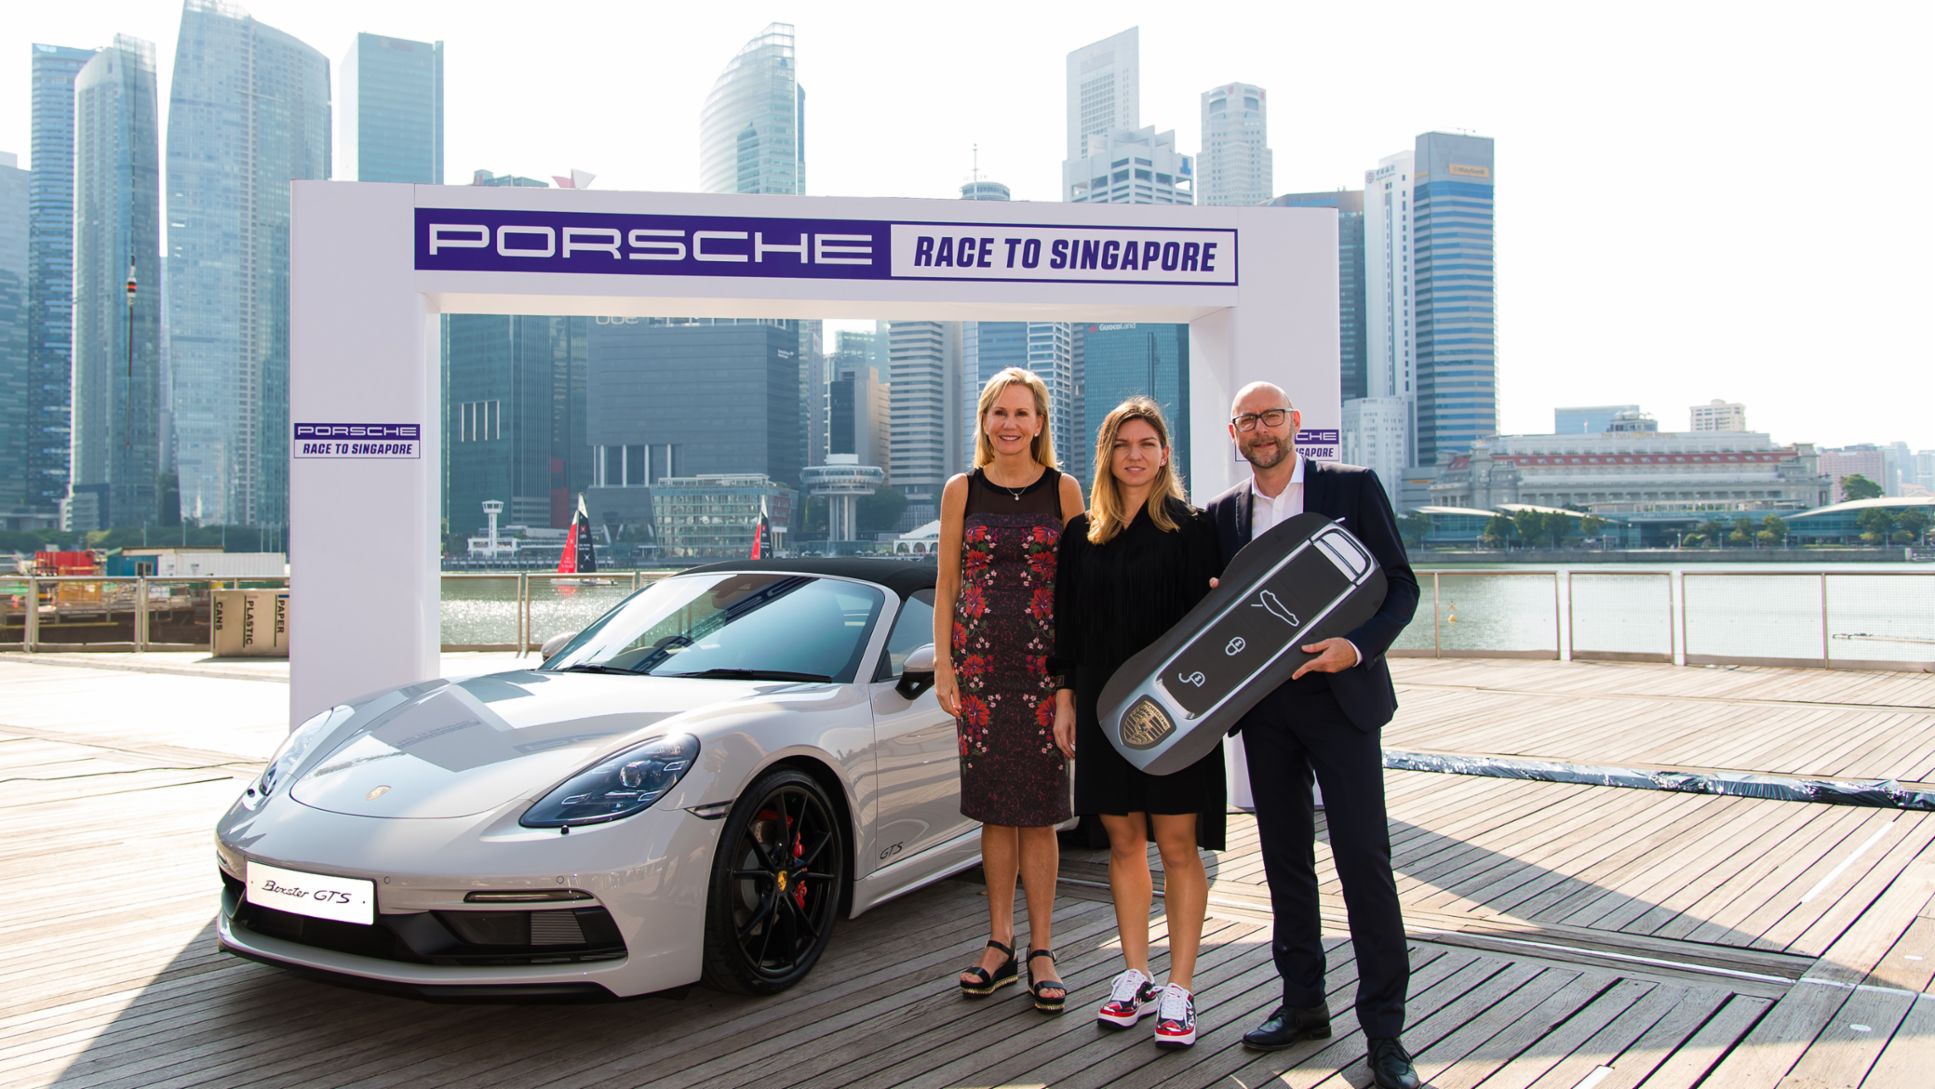 Micky Lawler, WTA, Simona Halep, Siegerin des “Porsche Race to Singapore”, Oliver Eidam, Porsche AG, l-r, 718 Boxster GTS, Singapur, 2018, Porsche AG